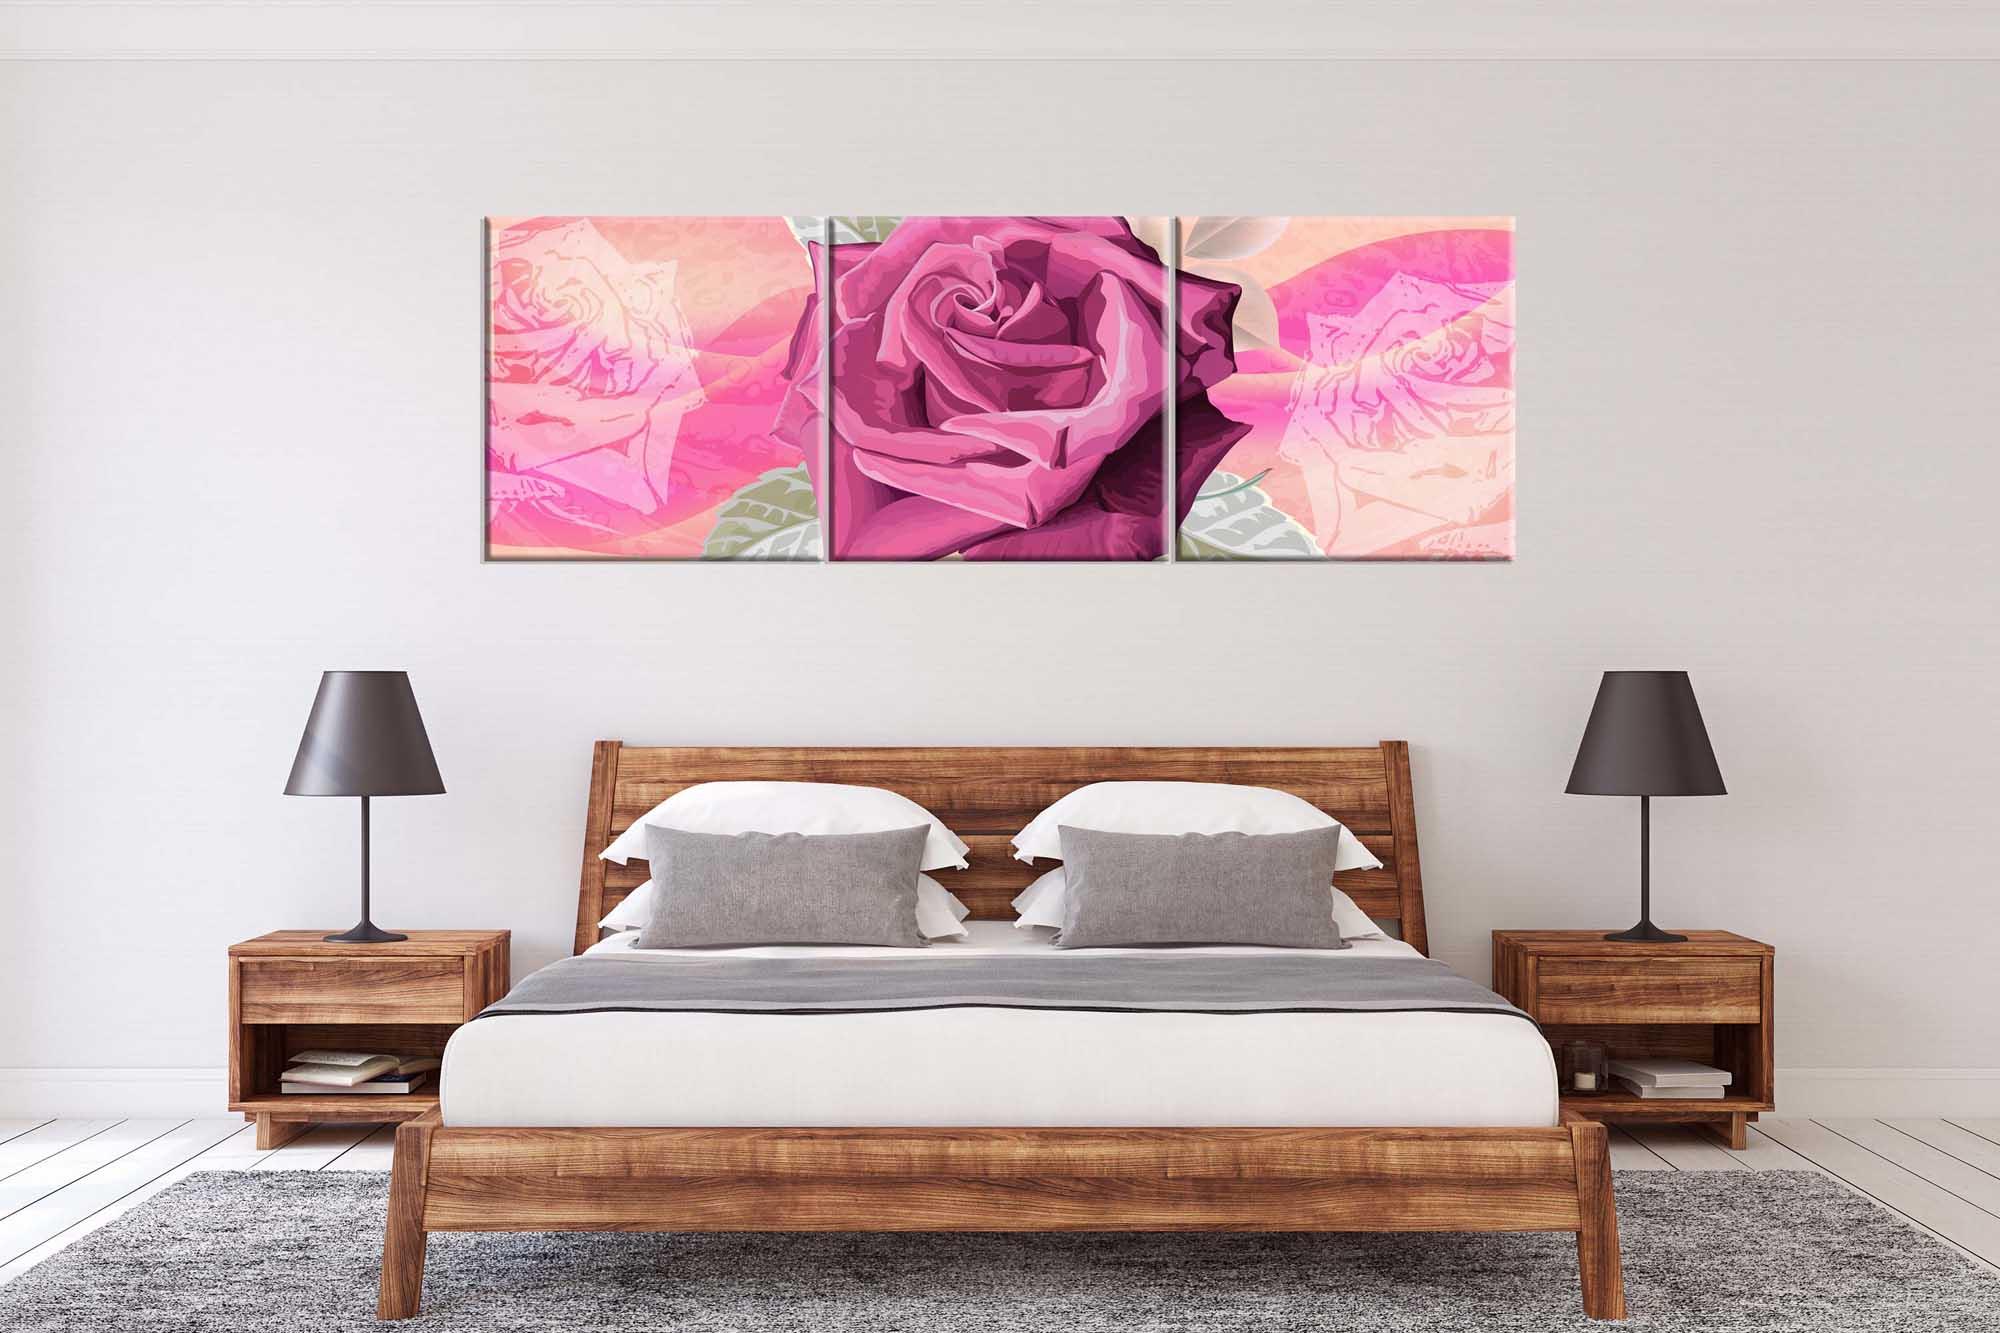 Modular picture - beautiful blooming rose